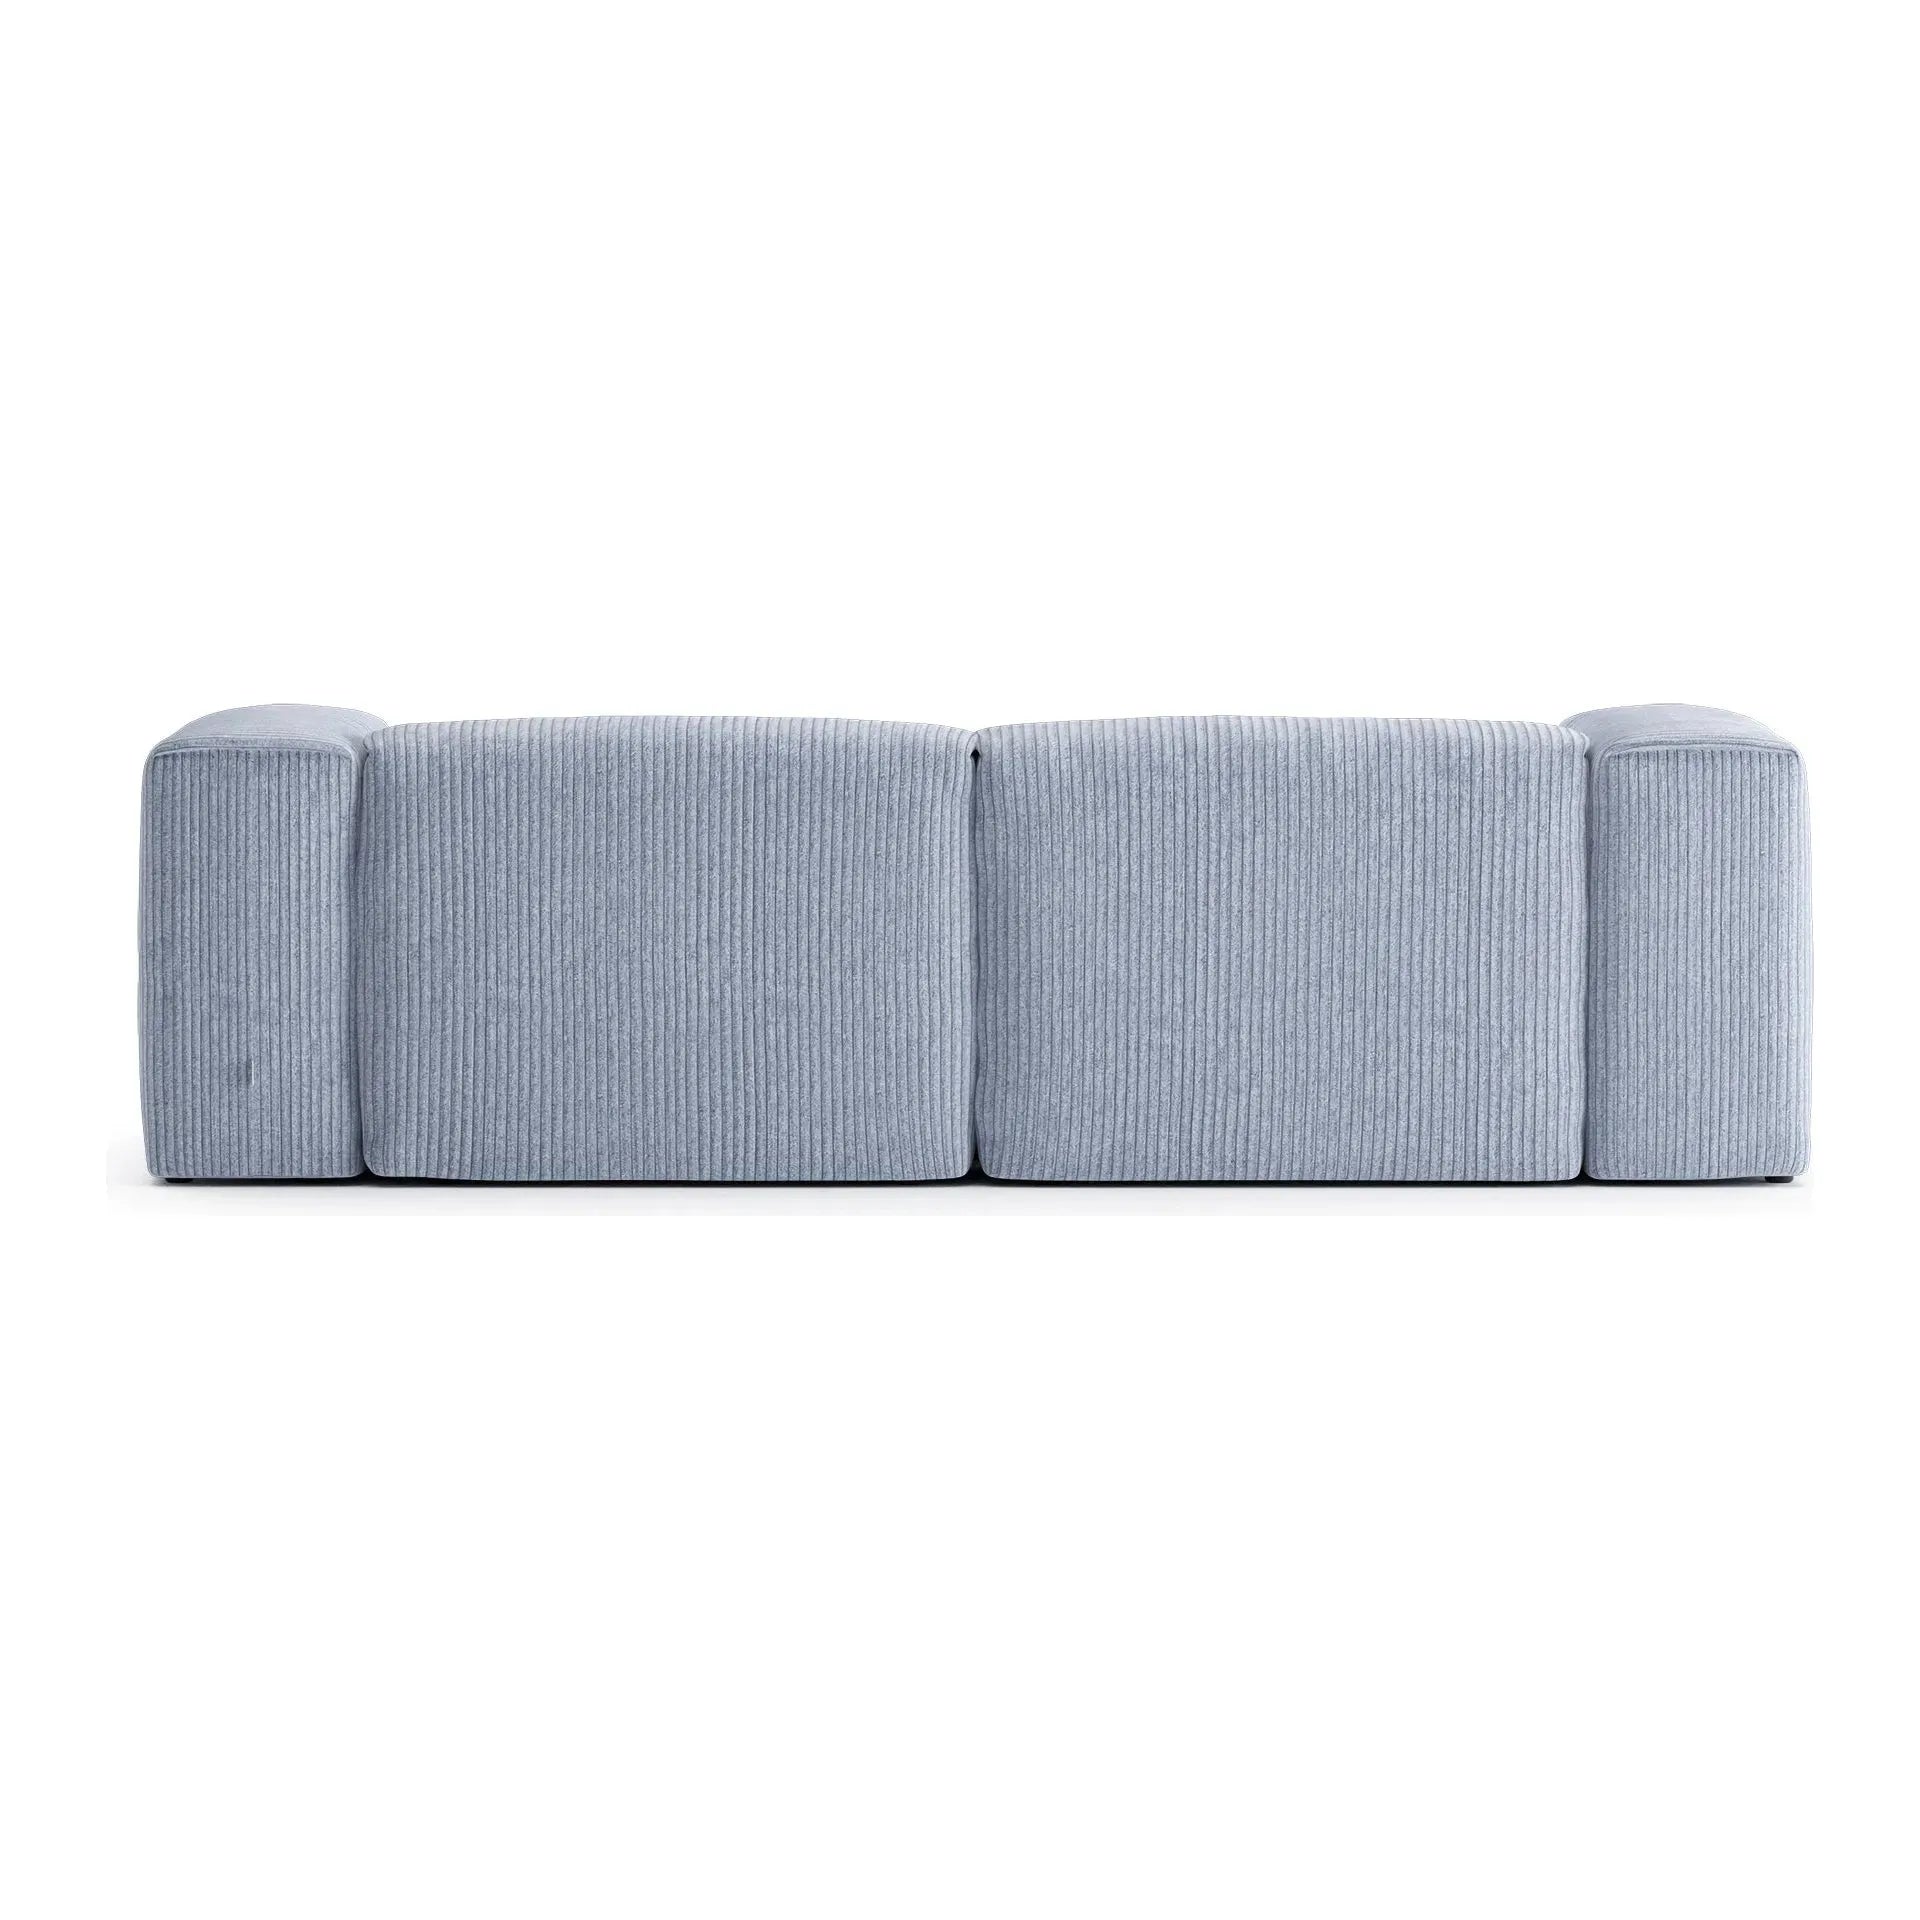 CLOUD XS 3 vietų sofa, mėlyna spalva, velvetas